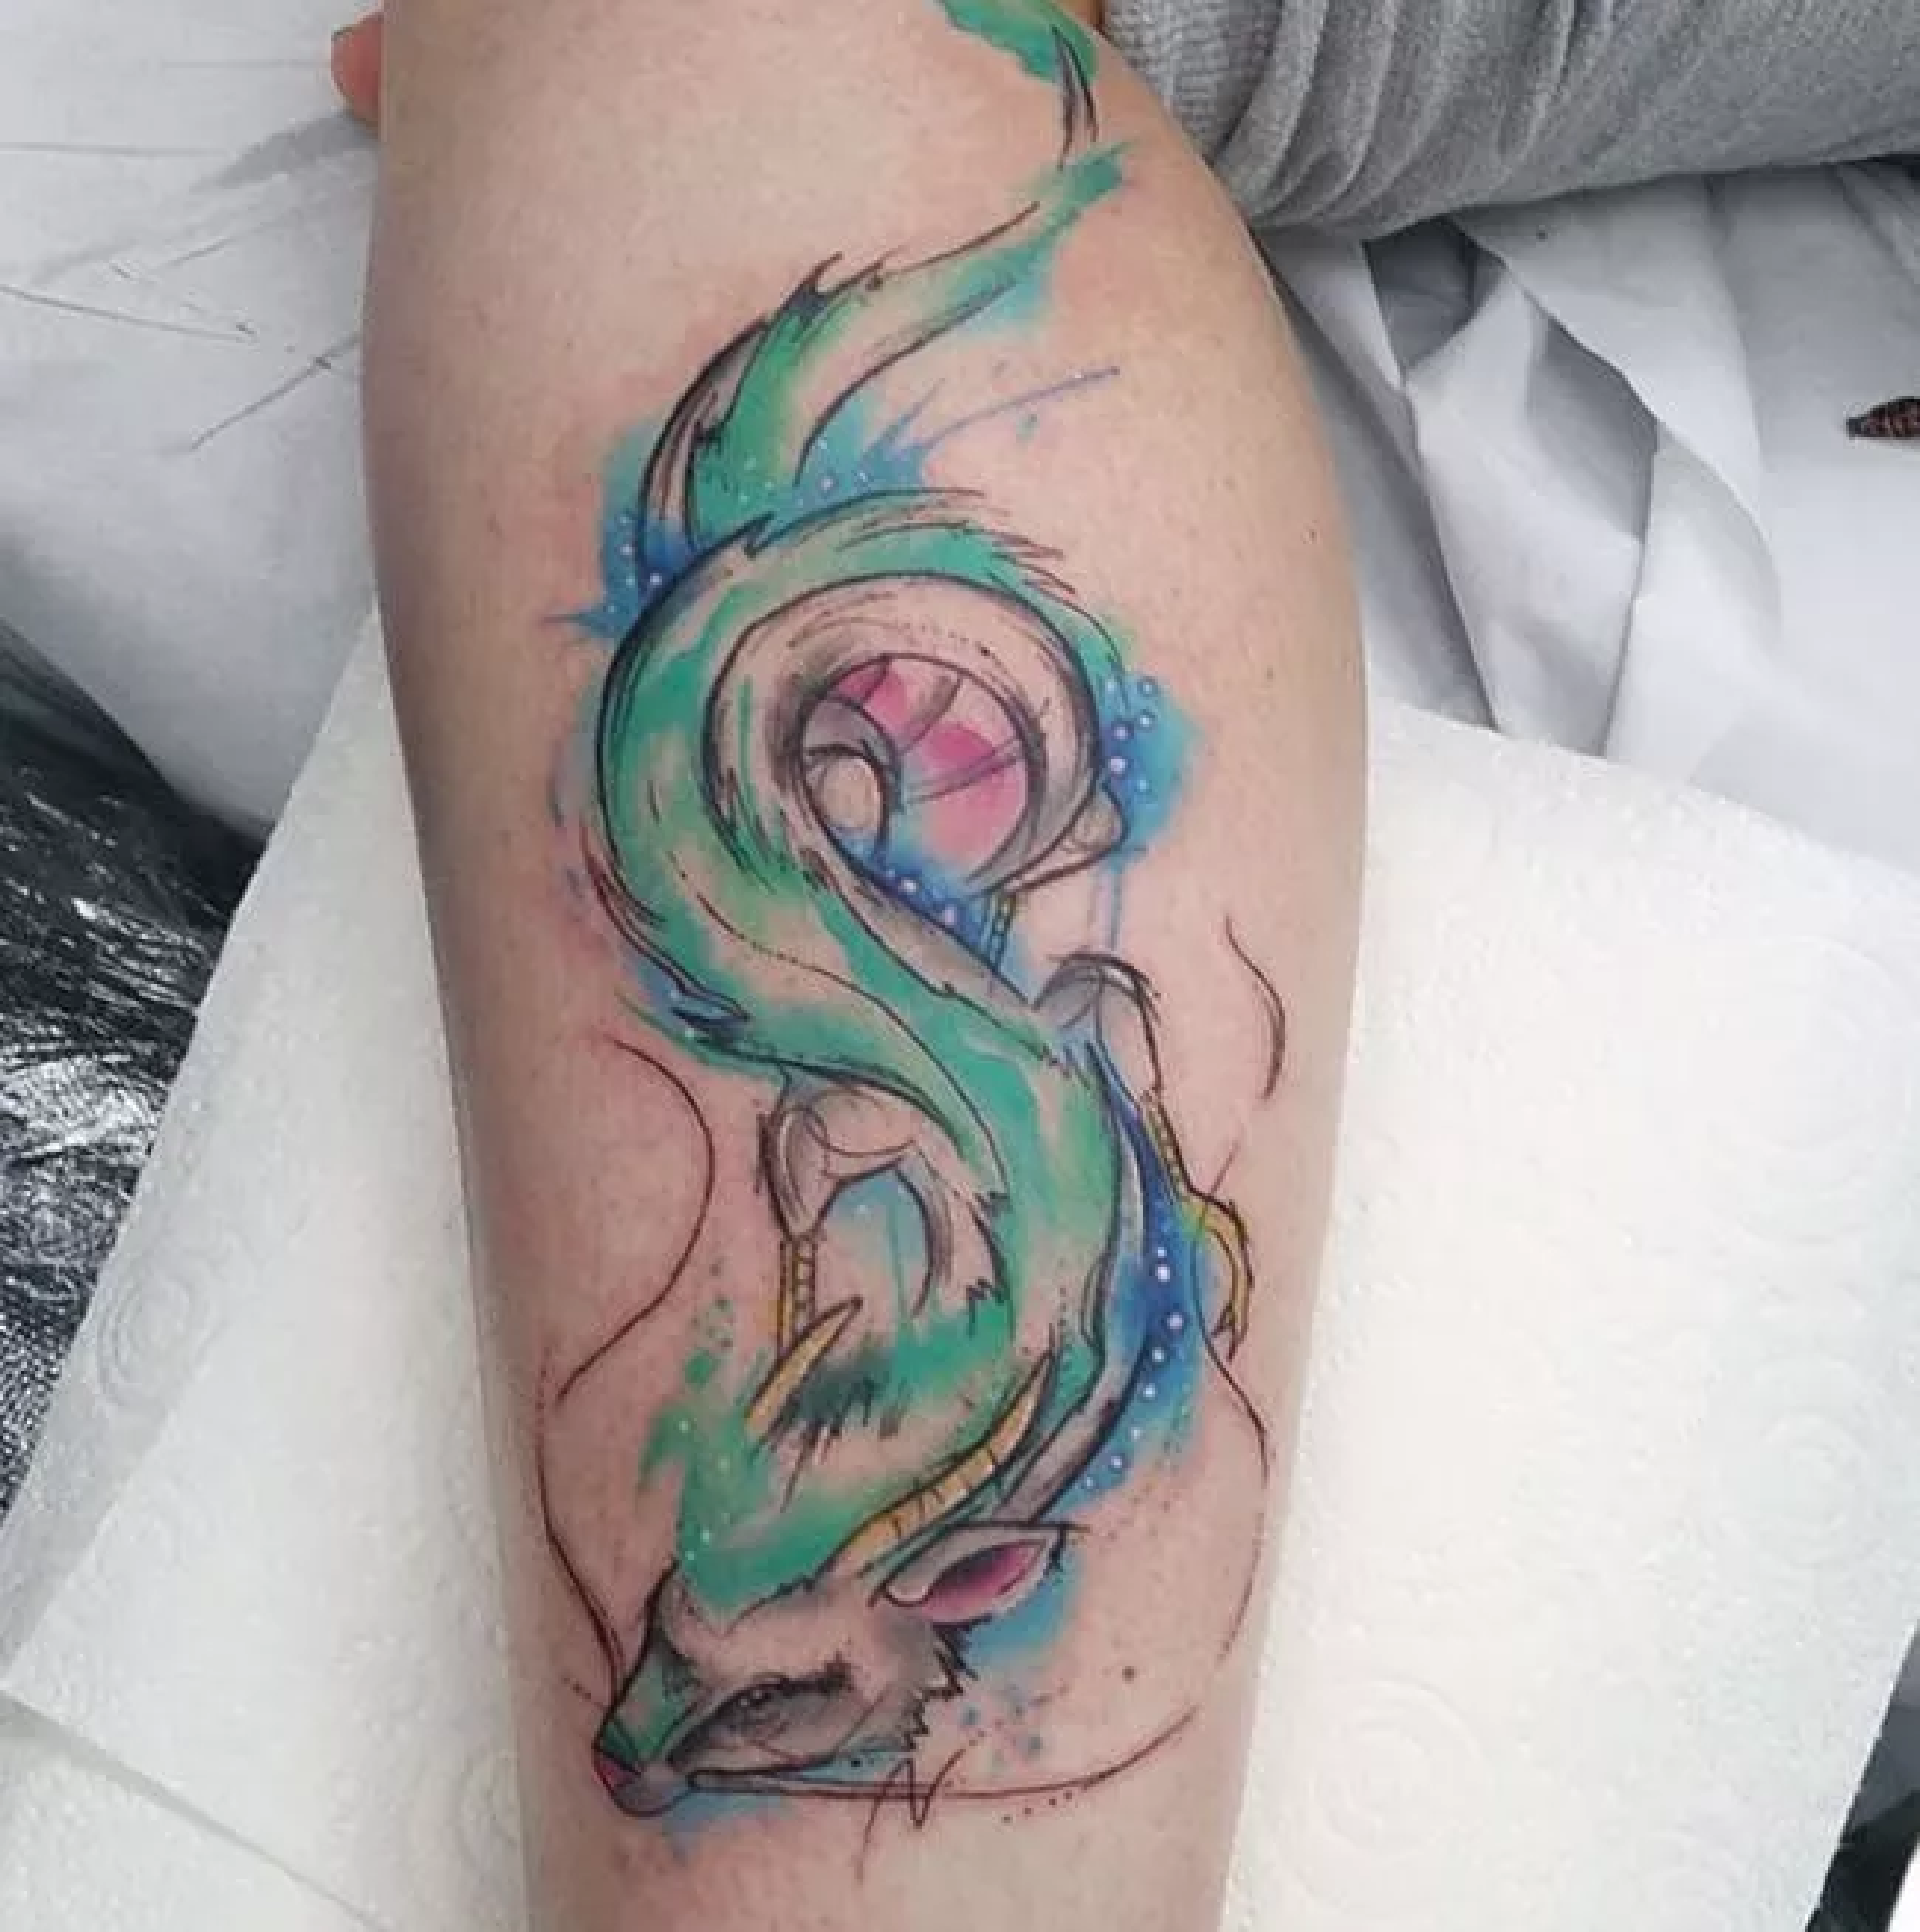 haku as a dragon from spirit away tattoo | Stable Diffusion